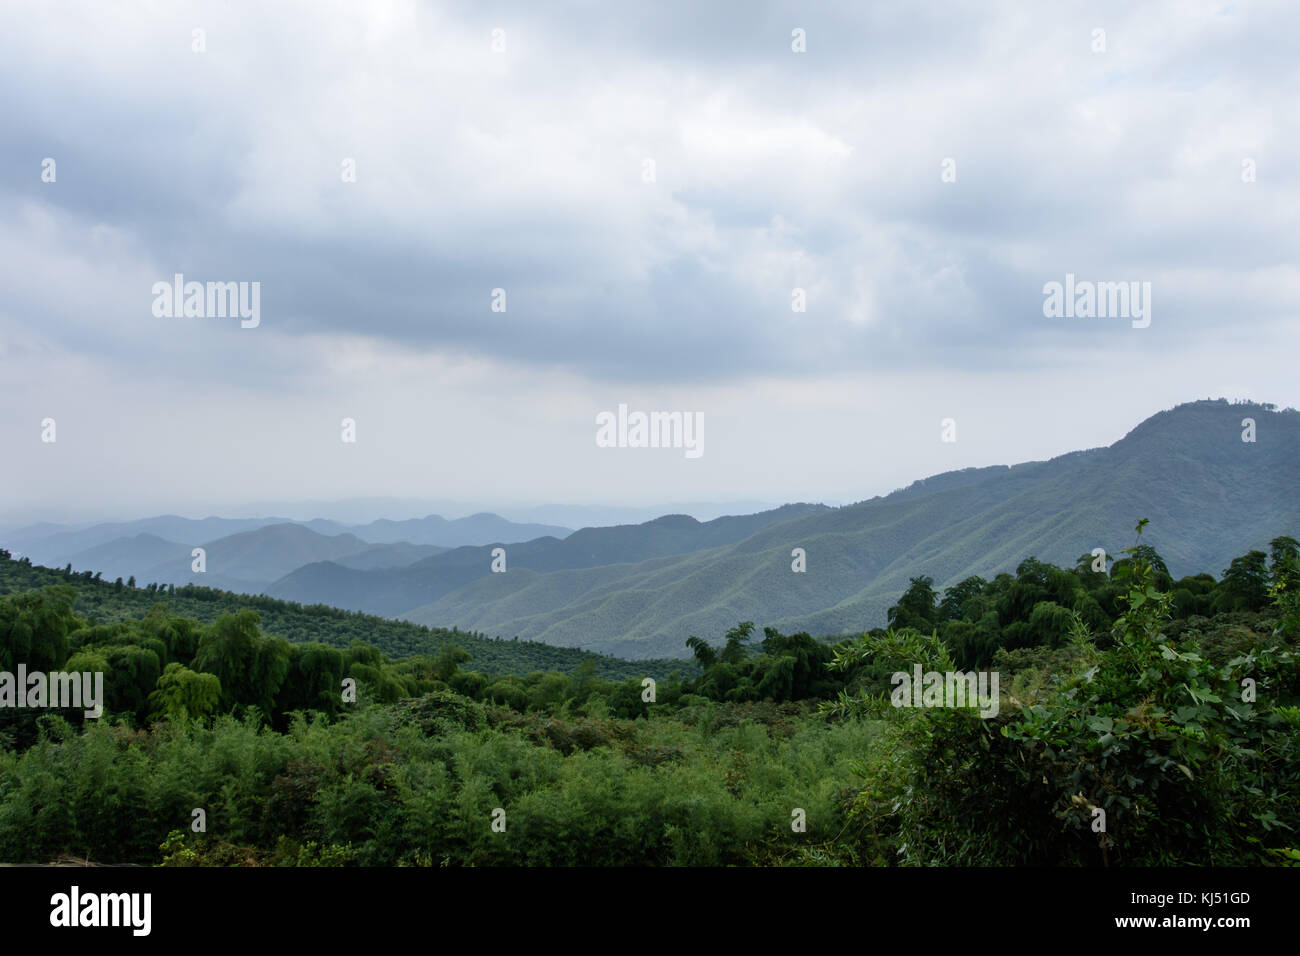 Blick über Tal mit bewölktem Himmel und grünen Bambus Wald an der Moganshan in China Stockfoto